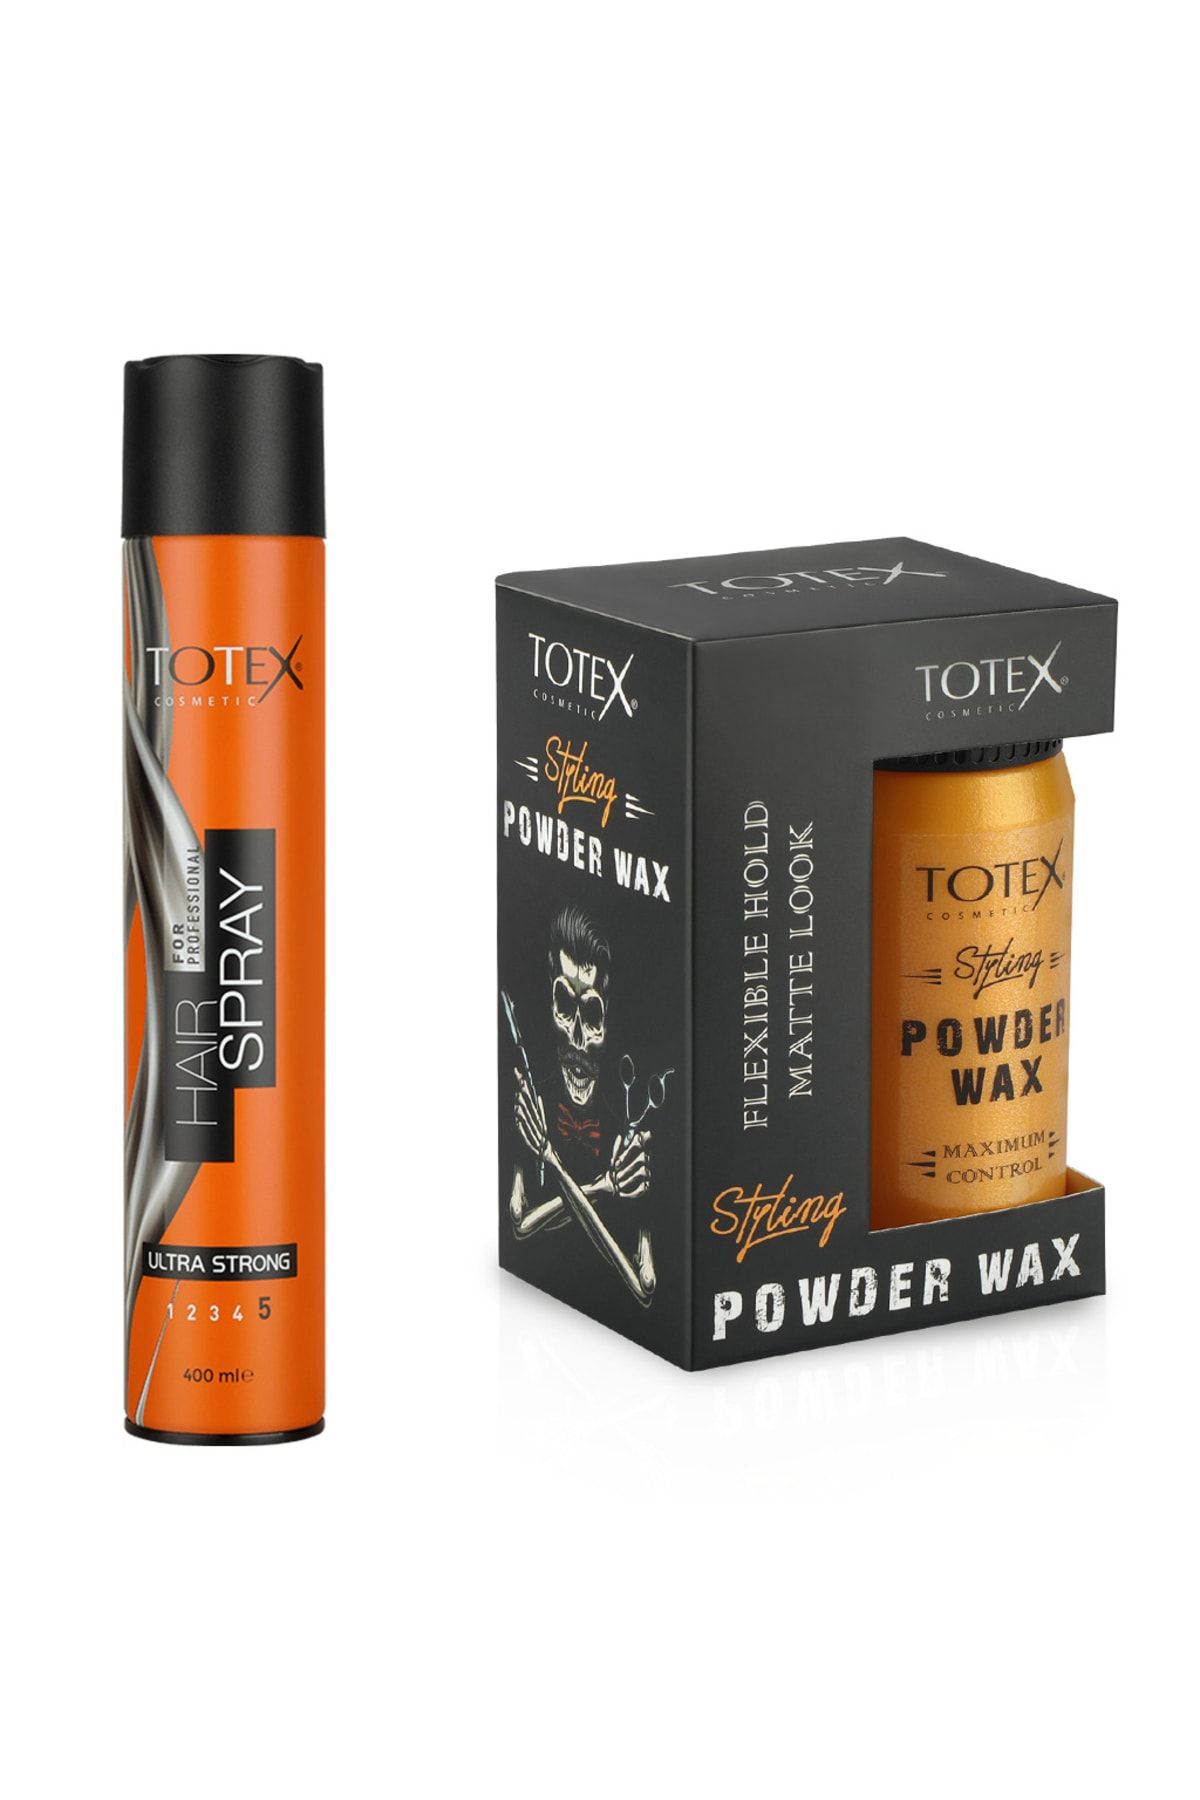 TOTEX Saç Şekillendirme Seti | Ultra Strong Saç Spreyi 400 Ml & Powder-toz Wax 20 Gr Set |